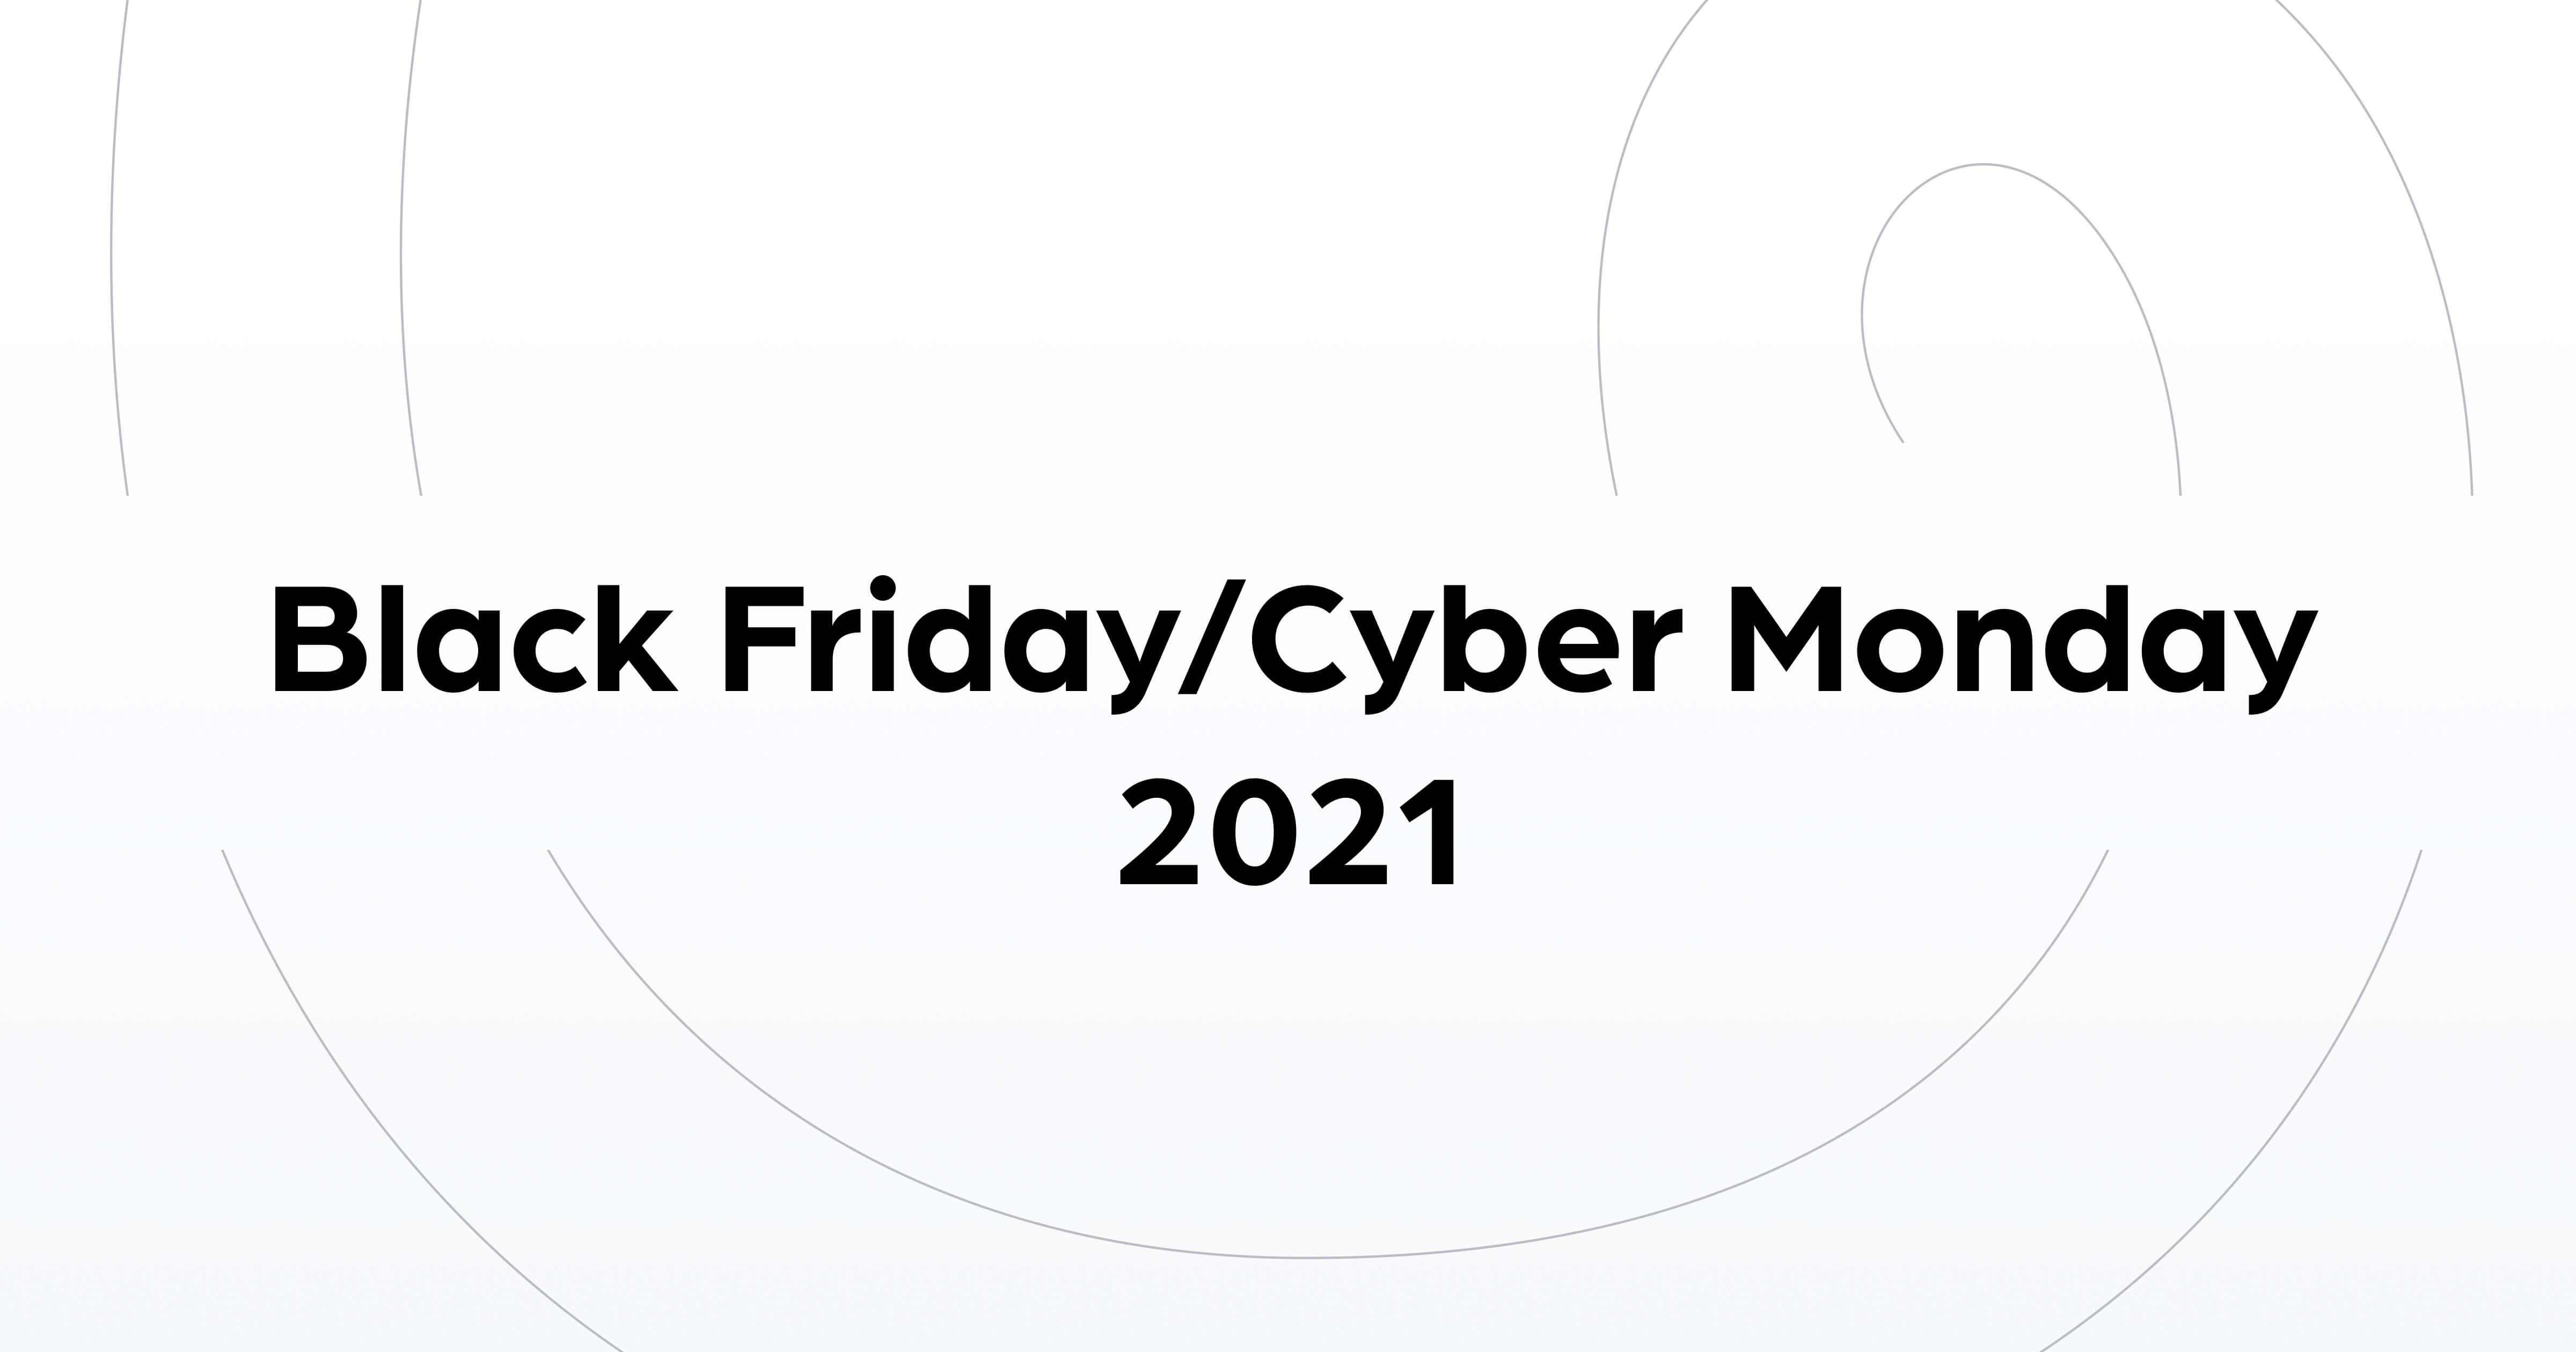 Black Friday/Cyber Monday 2021